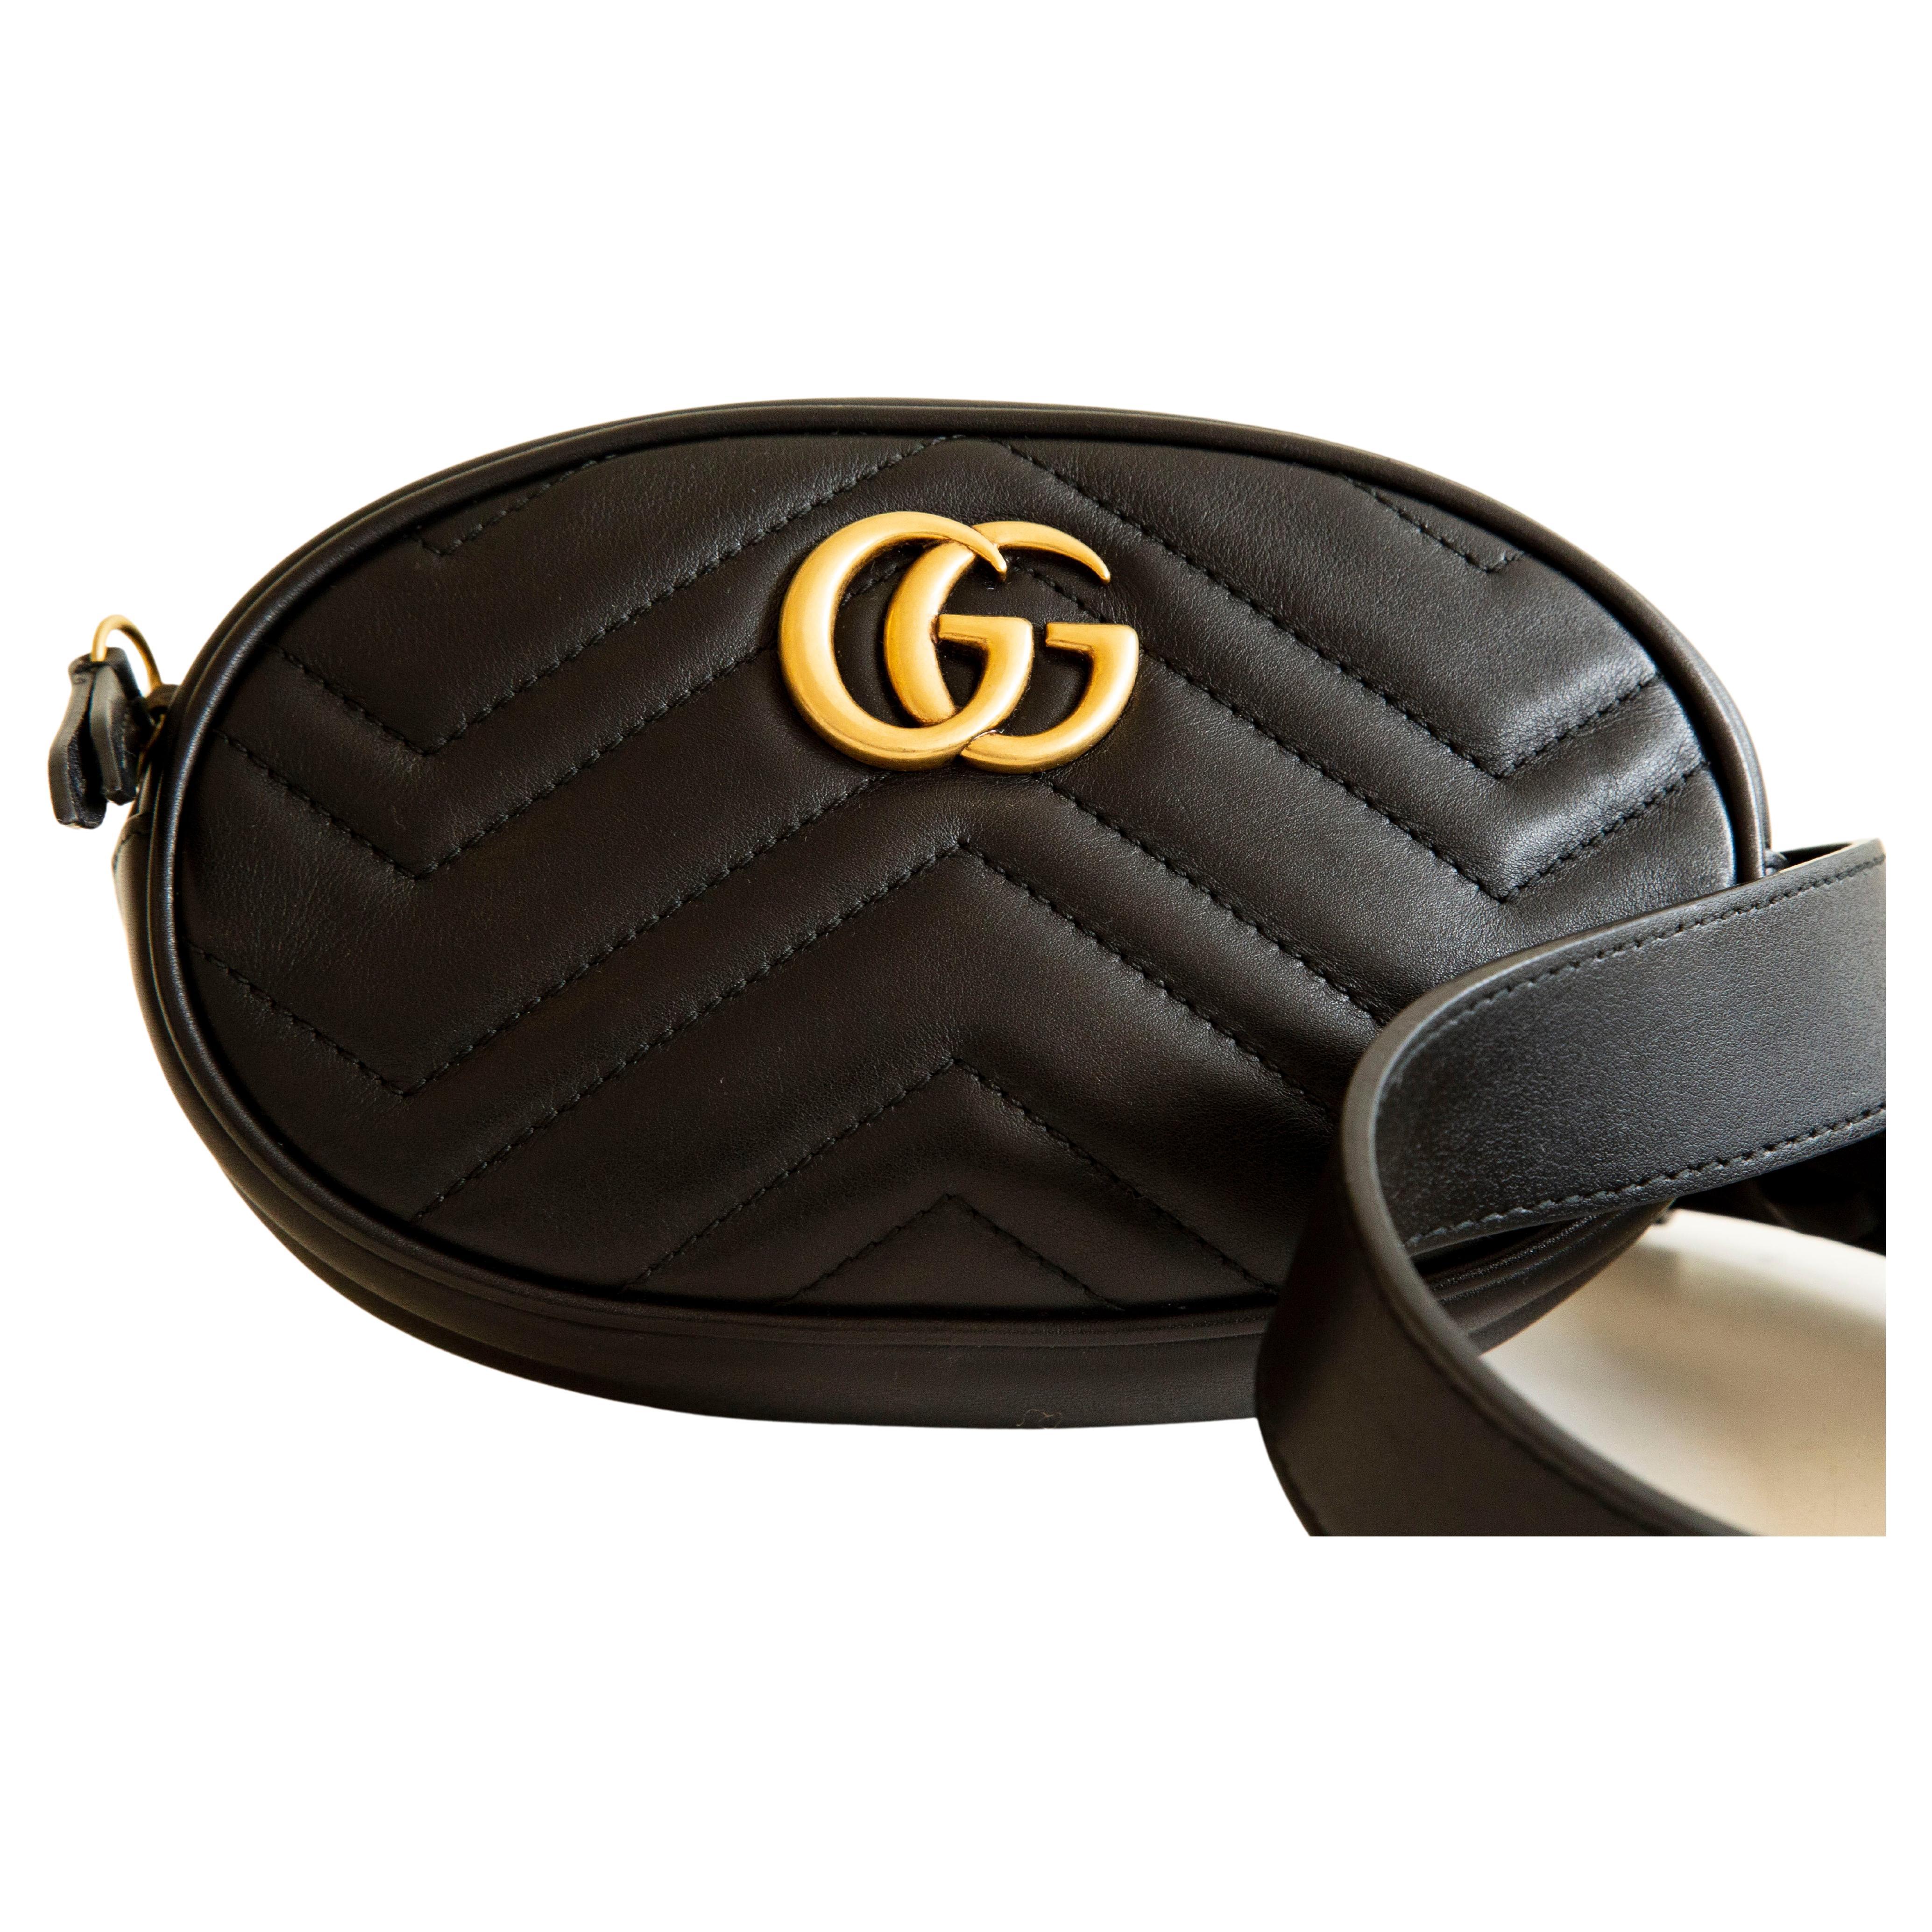 Gucci Matelasse Leather GG Marmont Belt Bag - Size 75